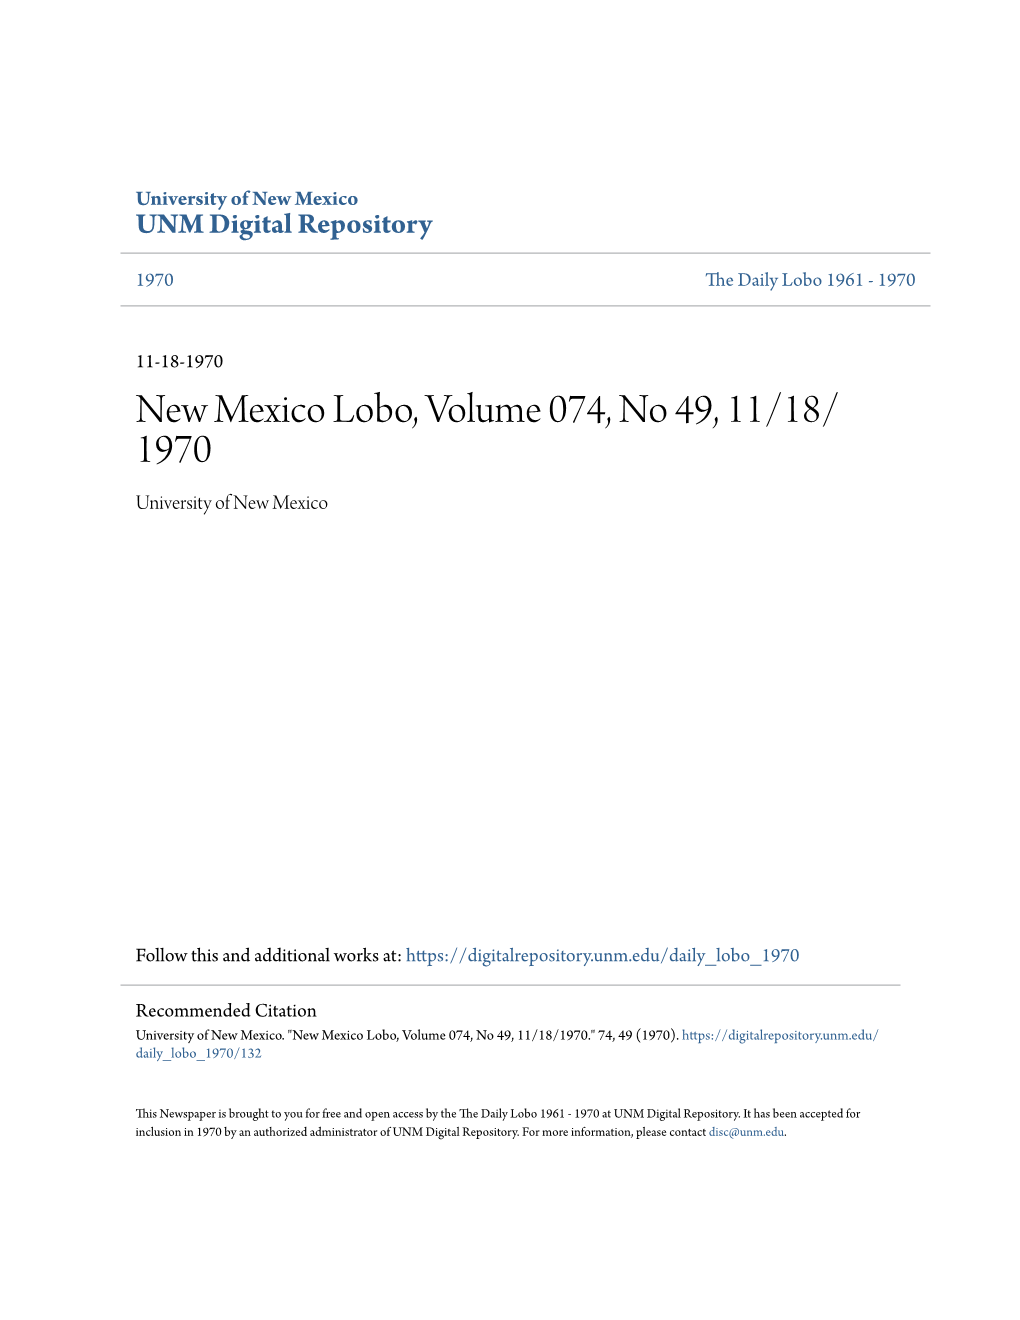 New Mexico Lobo, Volume 074, No 49, 11/18/1970." 74, 49 (1970)